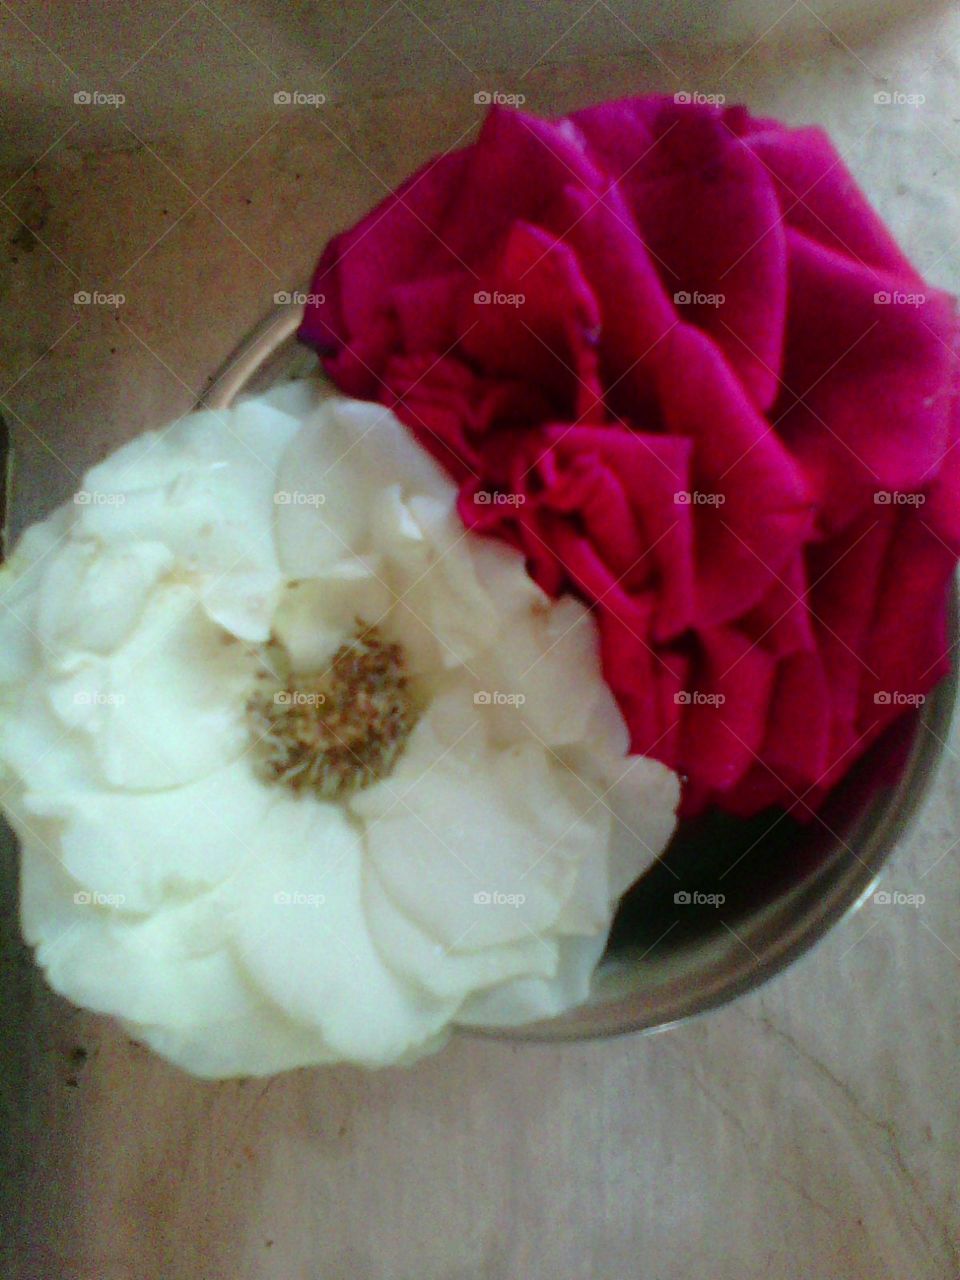 lovely roses for you